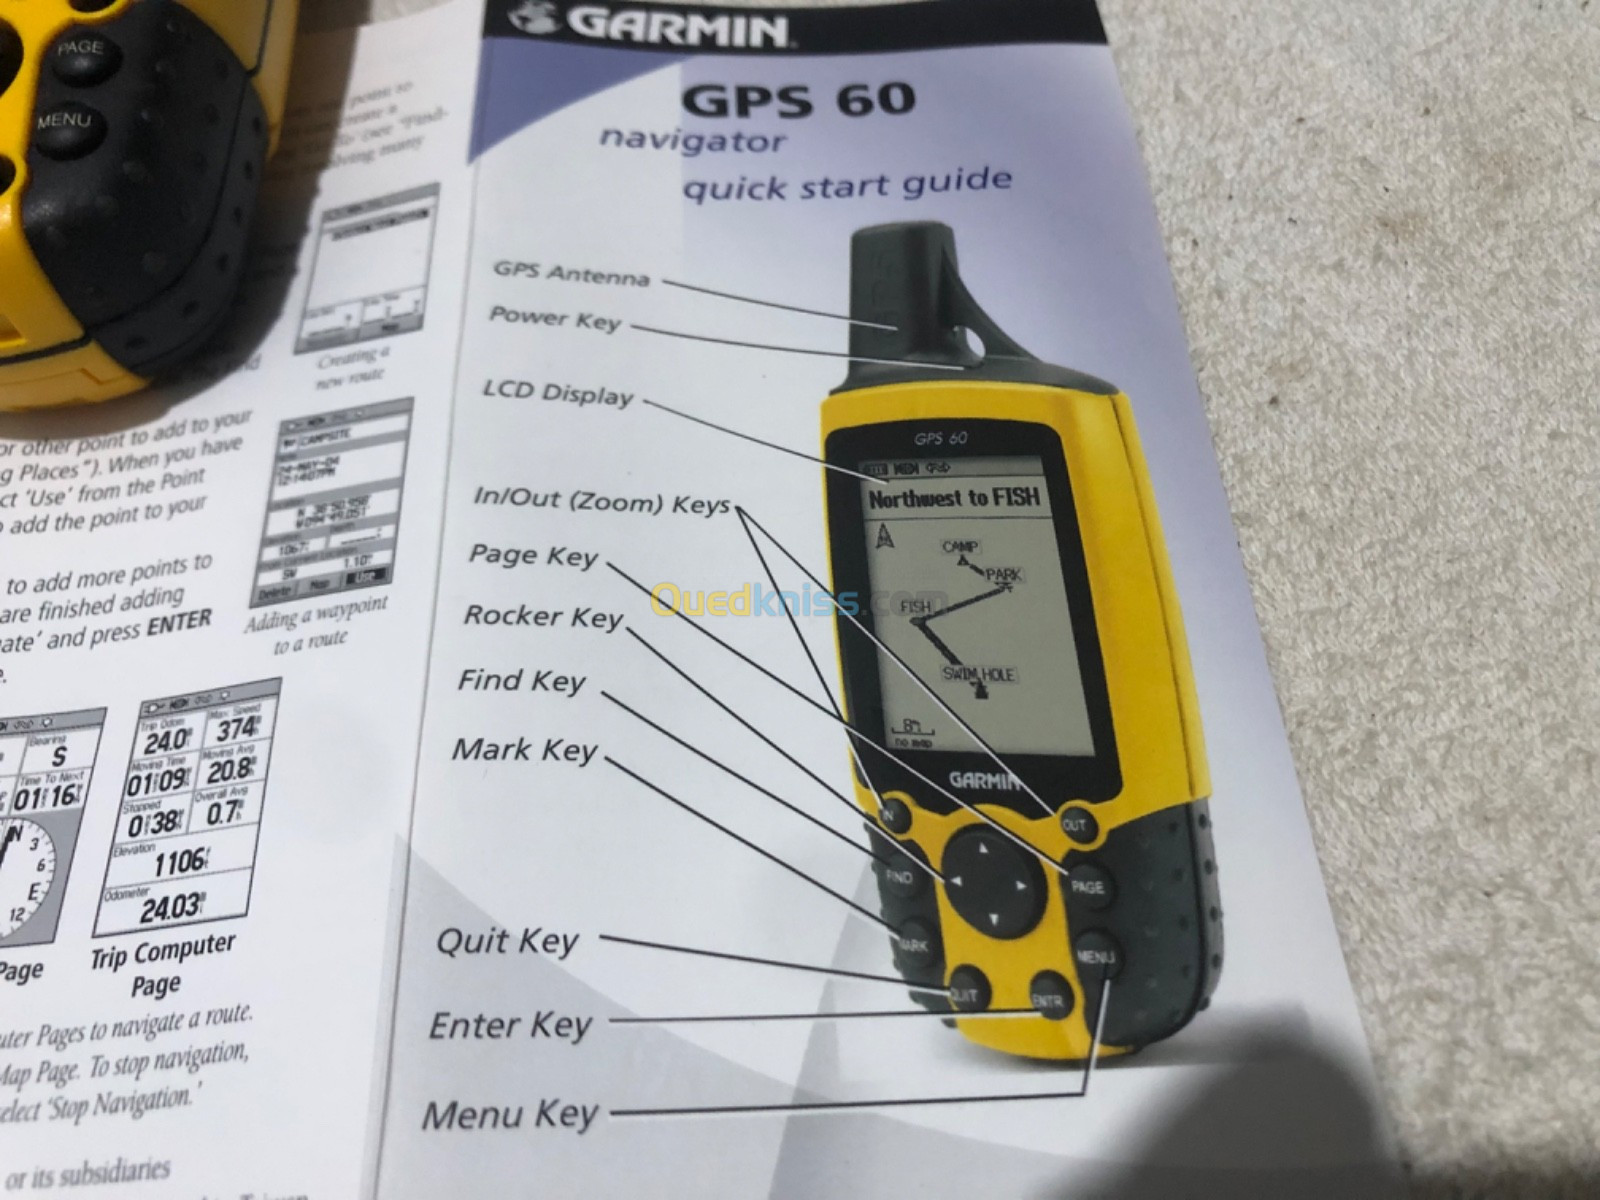 GPSMAP 64s / gps 62 / gps 60